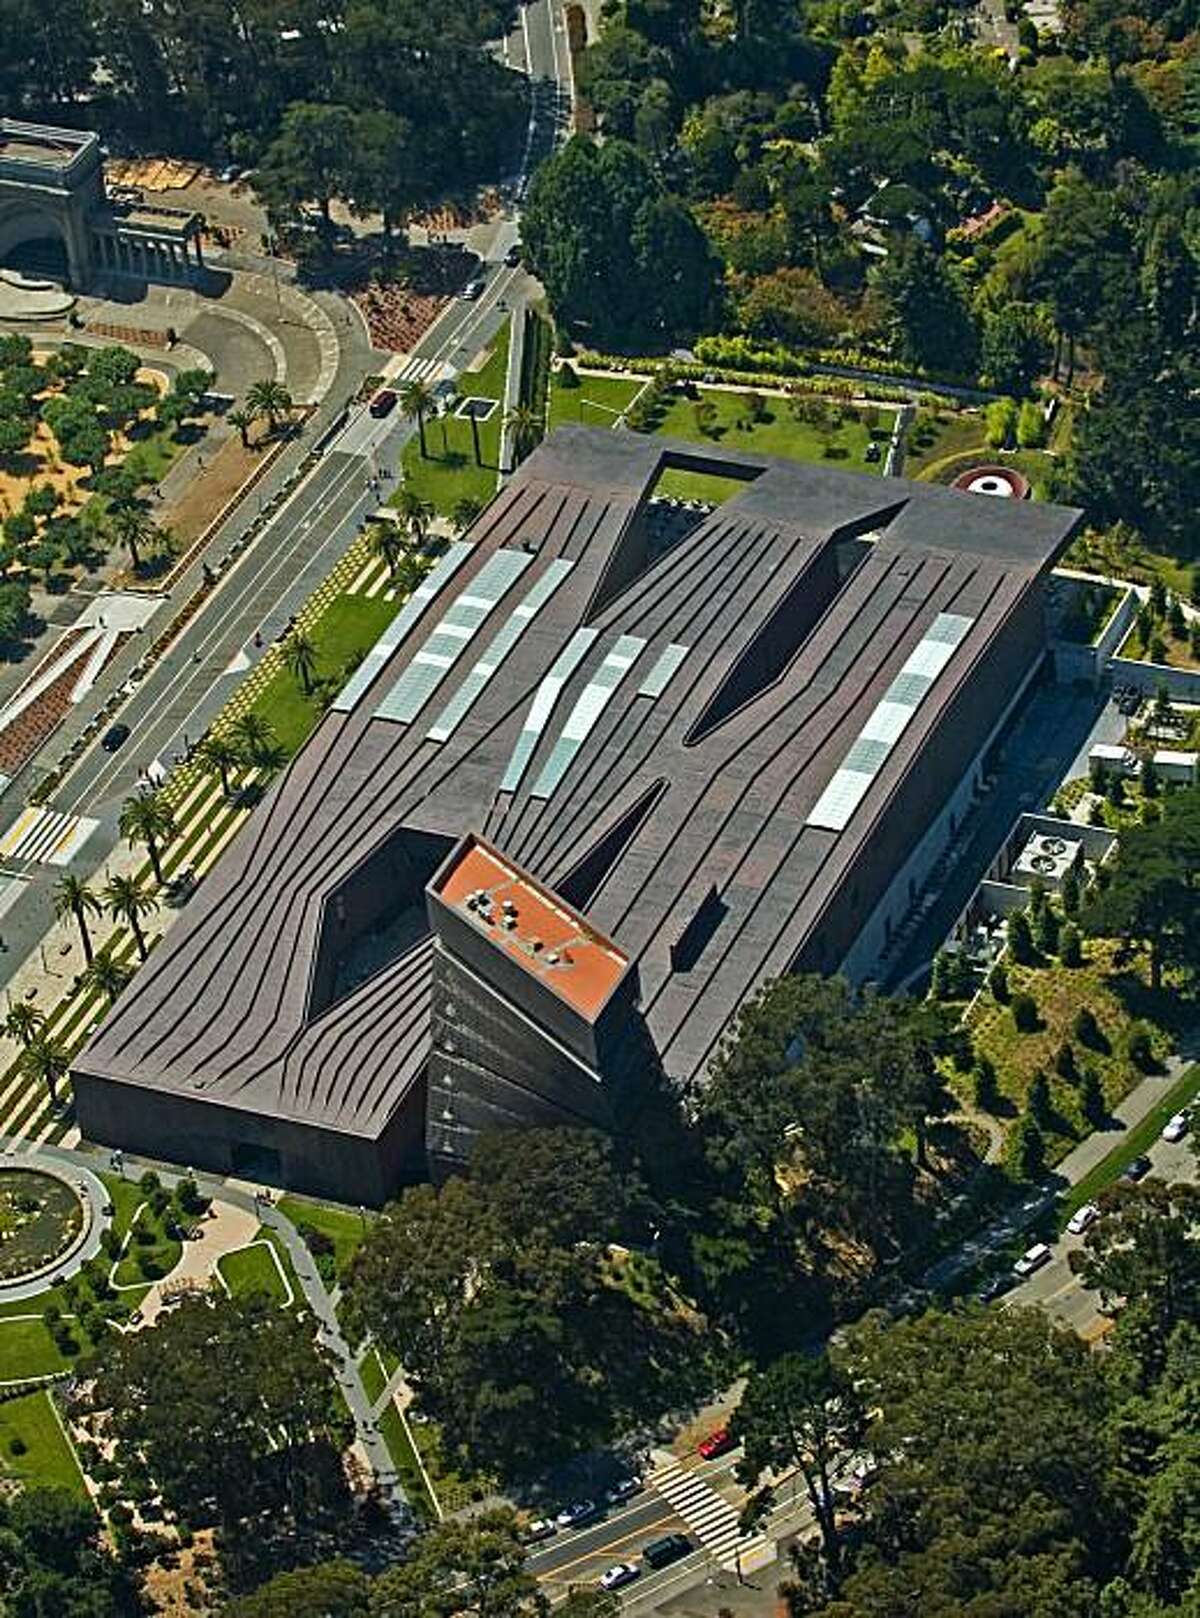 The Swiss firm Herzog & de Meuron, winners of the Pritzker Prize, designed the new de Young Museum.